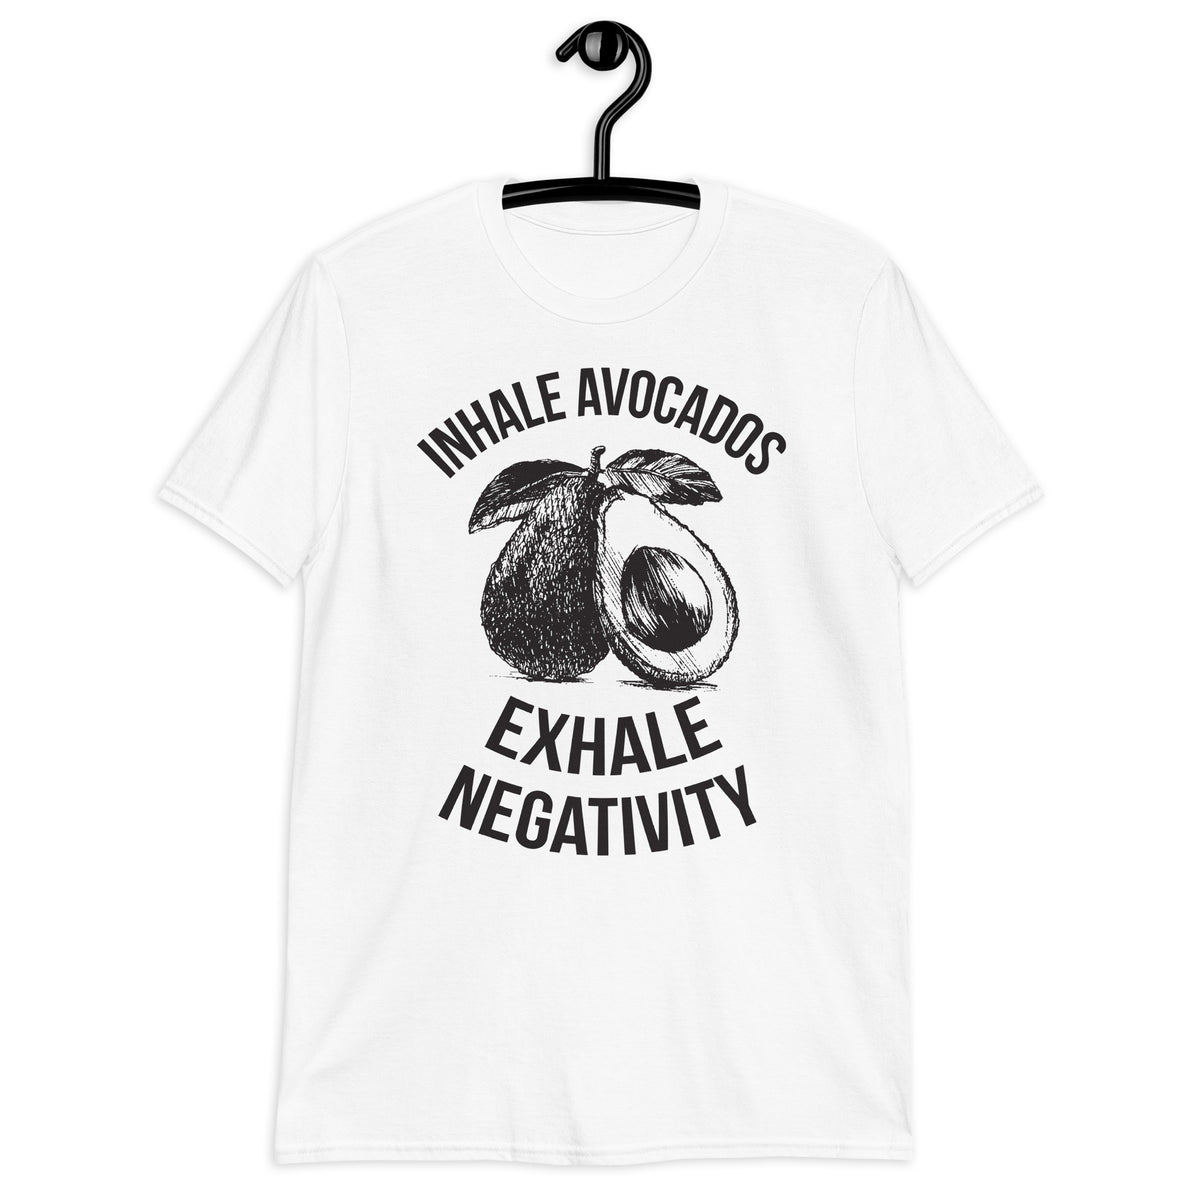 INHALE AVOCADO EXHALE NEGATIVITY Short-Sleeve T-Shirt